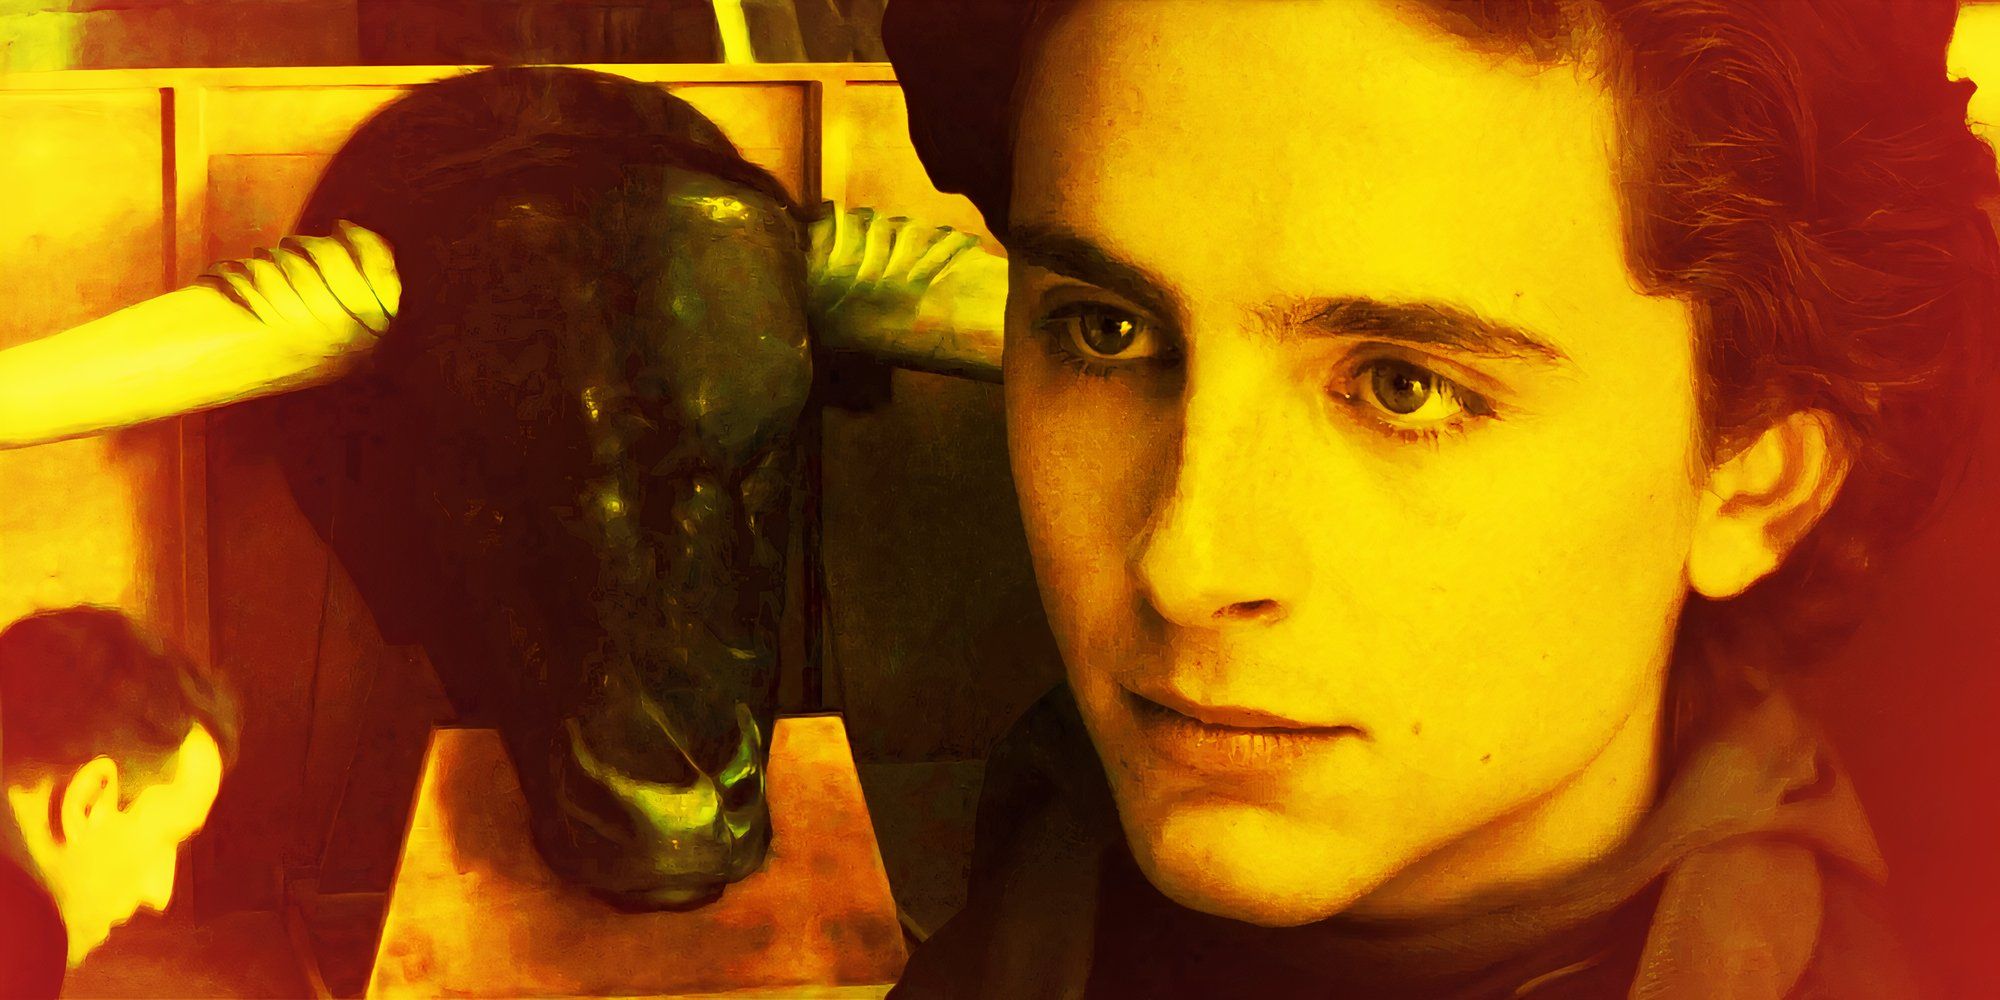 Paul Atreides (Timothee Chalamet) in front of Duke Leto Atreides' bull head statue in Dune